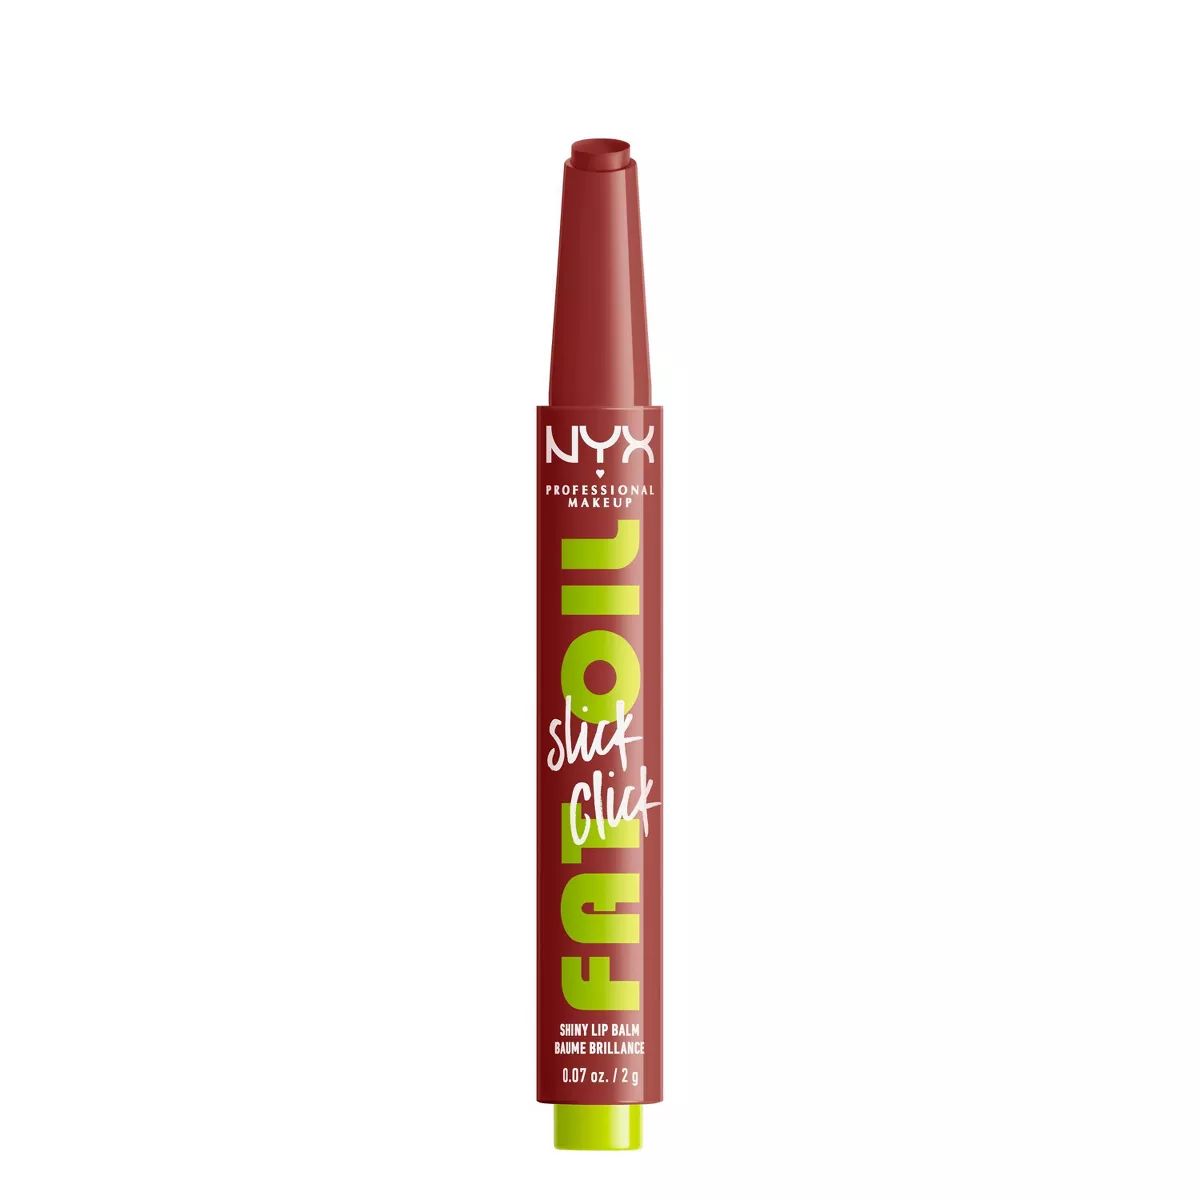 NYX Professional Makeup Fat Oil Slick Click Tinted Lip Balm - 0.07oz | Target